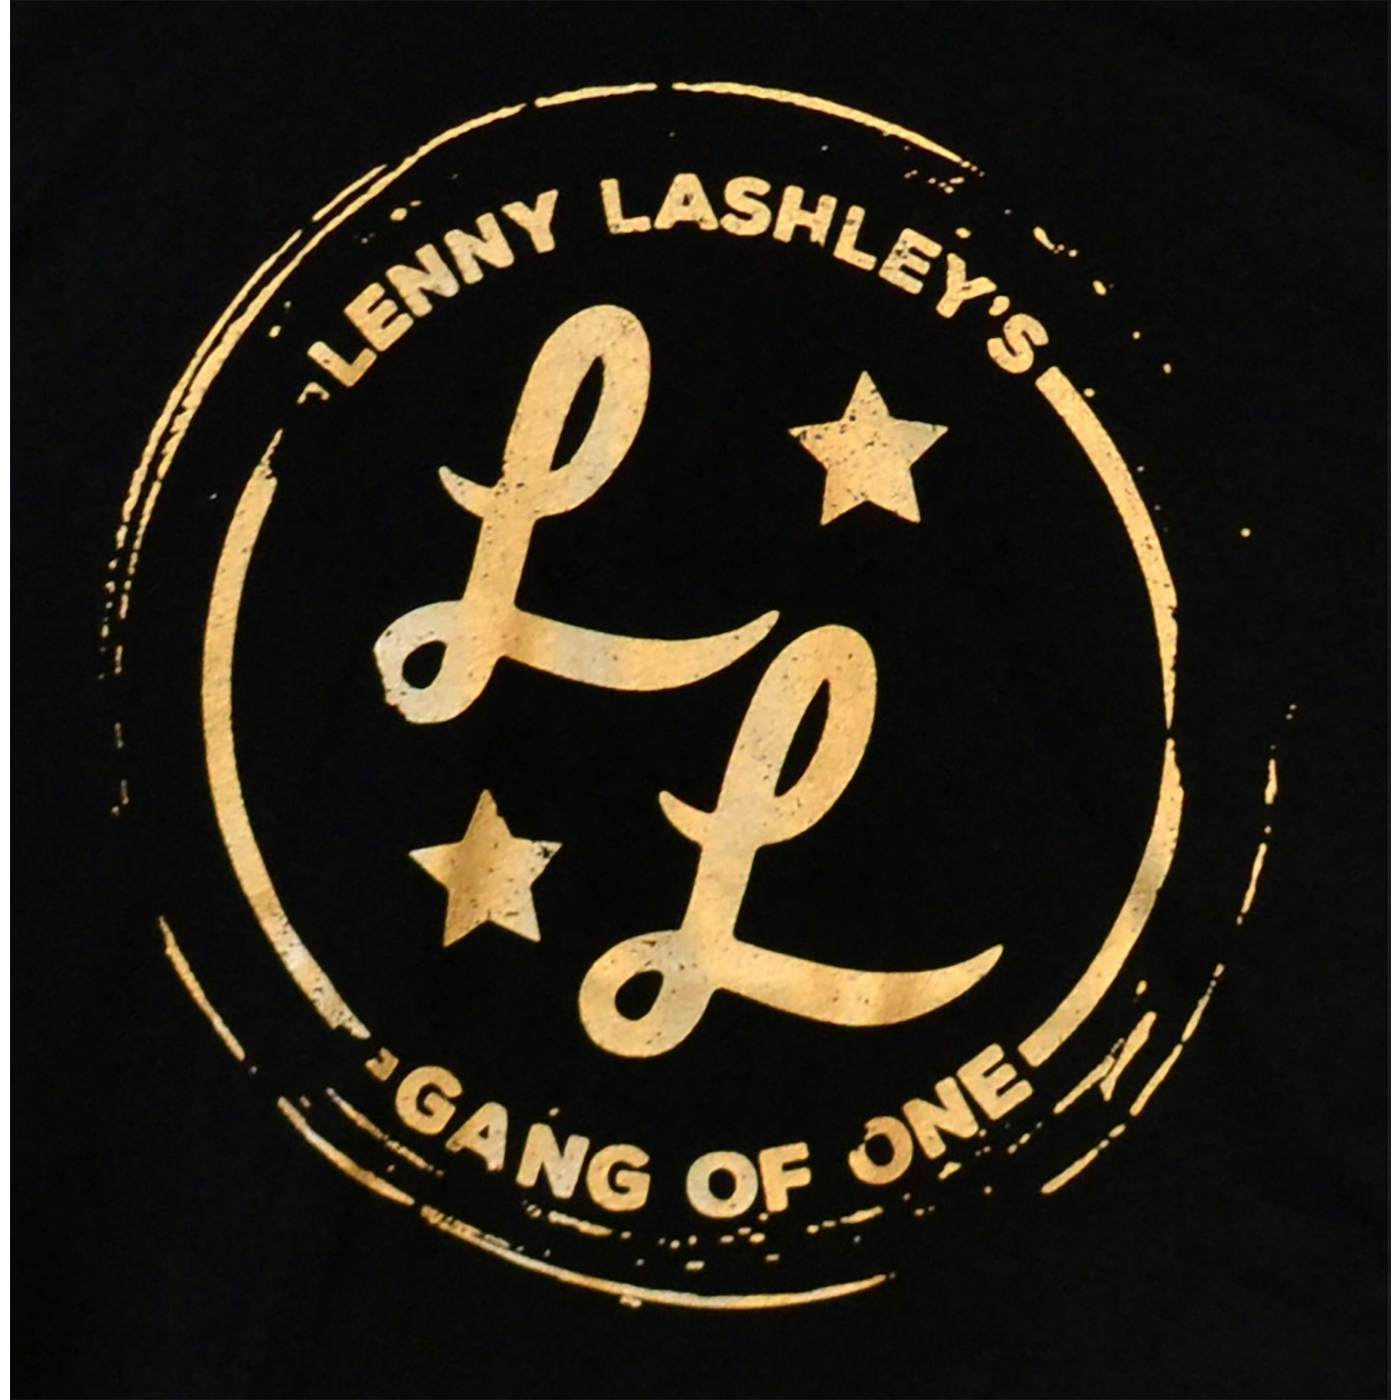 Lenny Lashley's Gang of One Lenny Lashley Gang of One - Logo - Black - T-Shirt